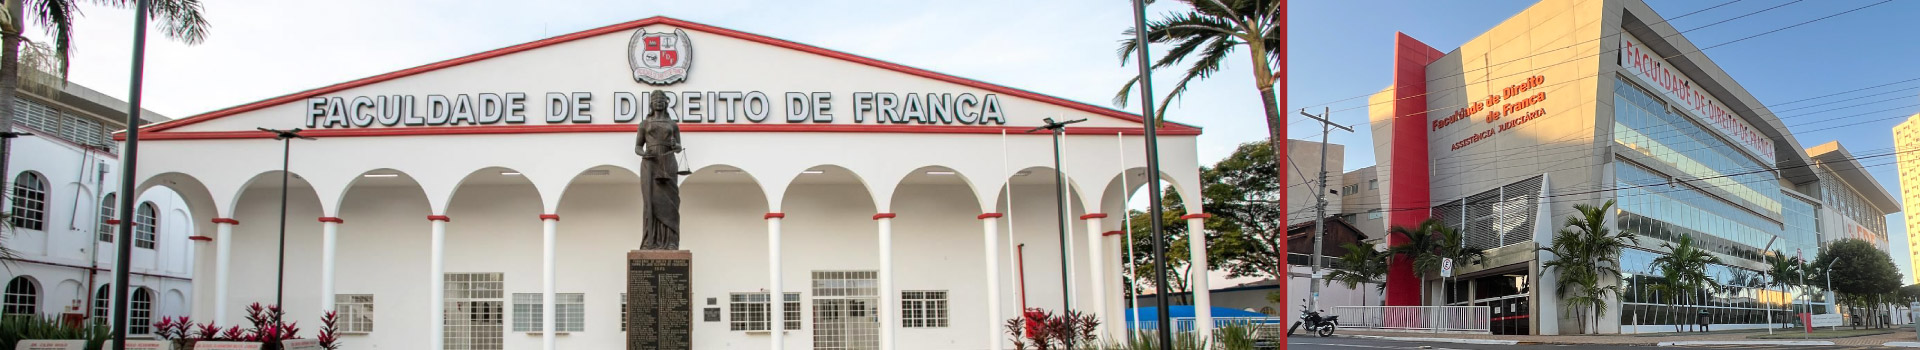 Foto da fachada da Faculdade de Direito de Franca